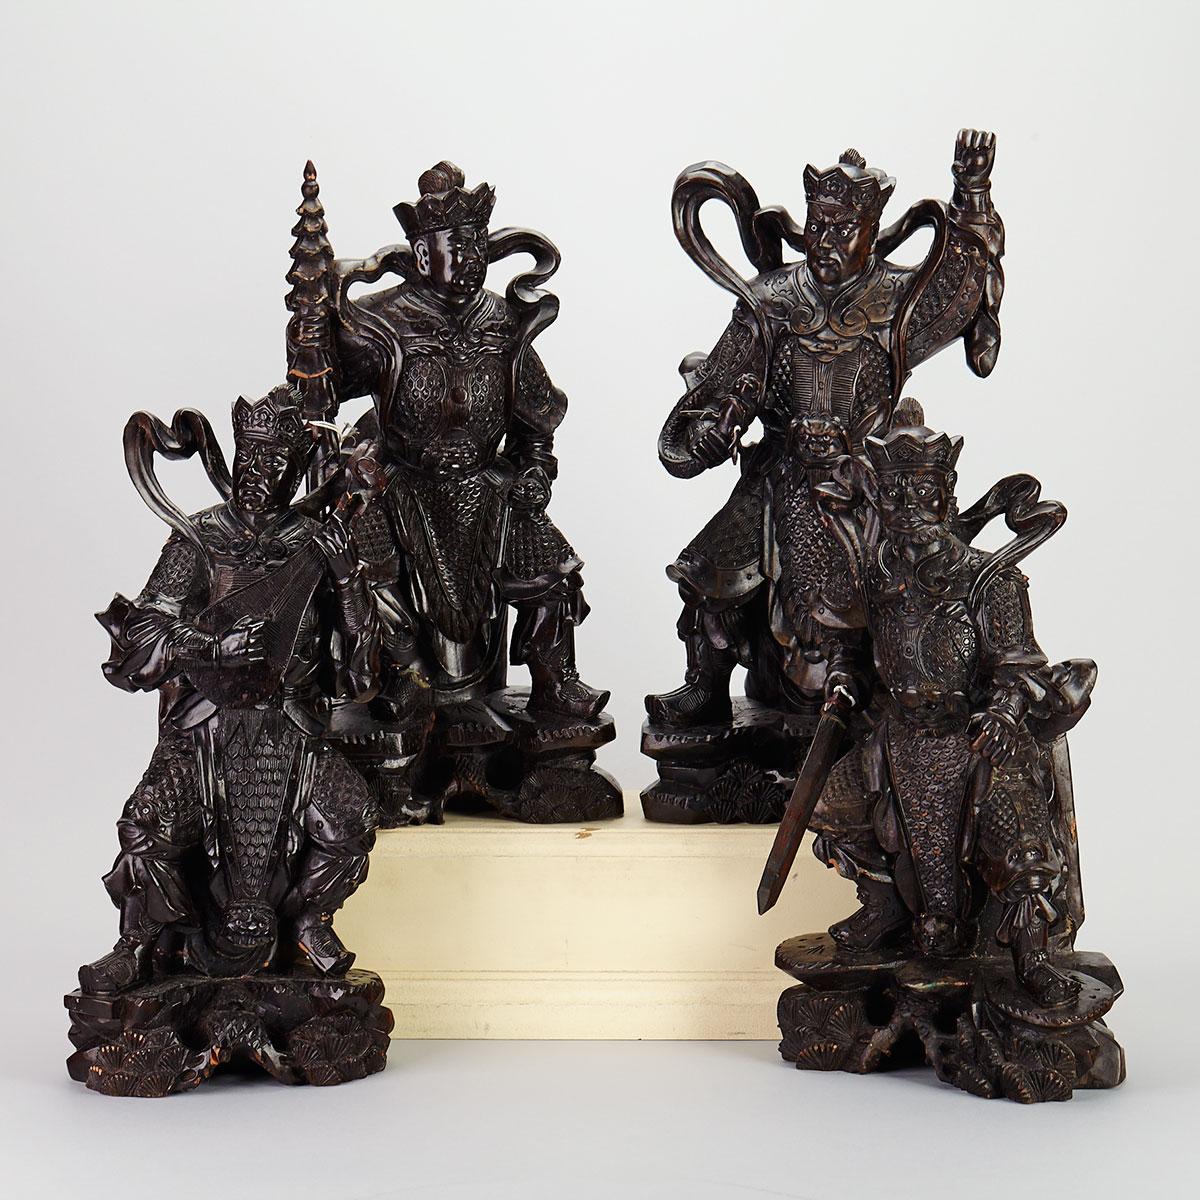 Hardwood Figures of the Four Deva Kings